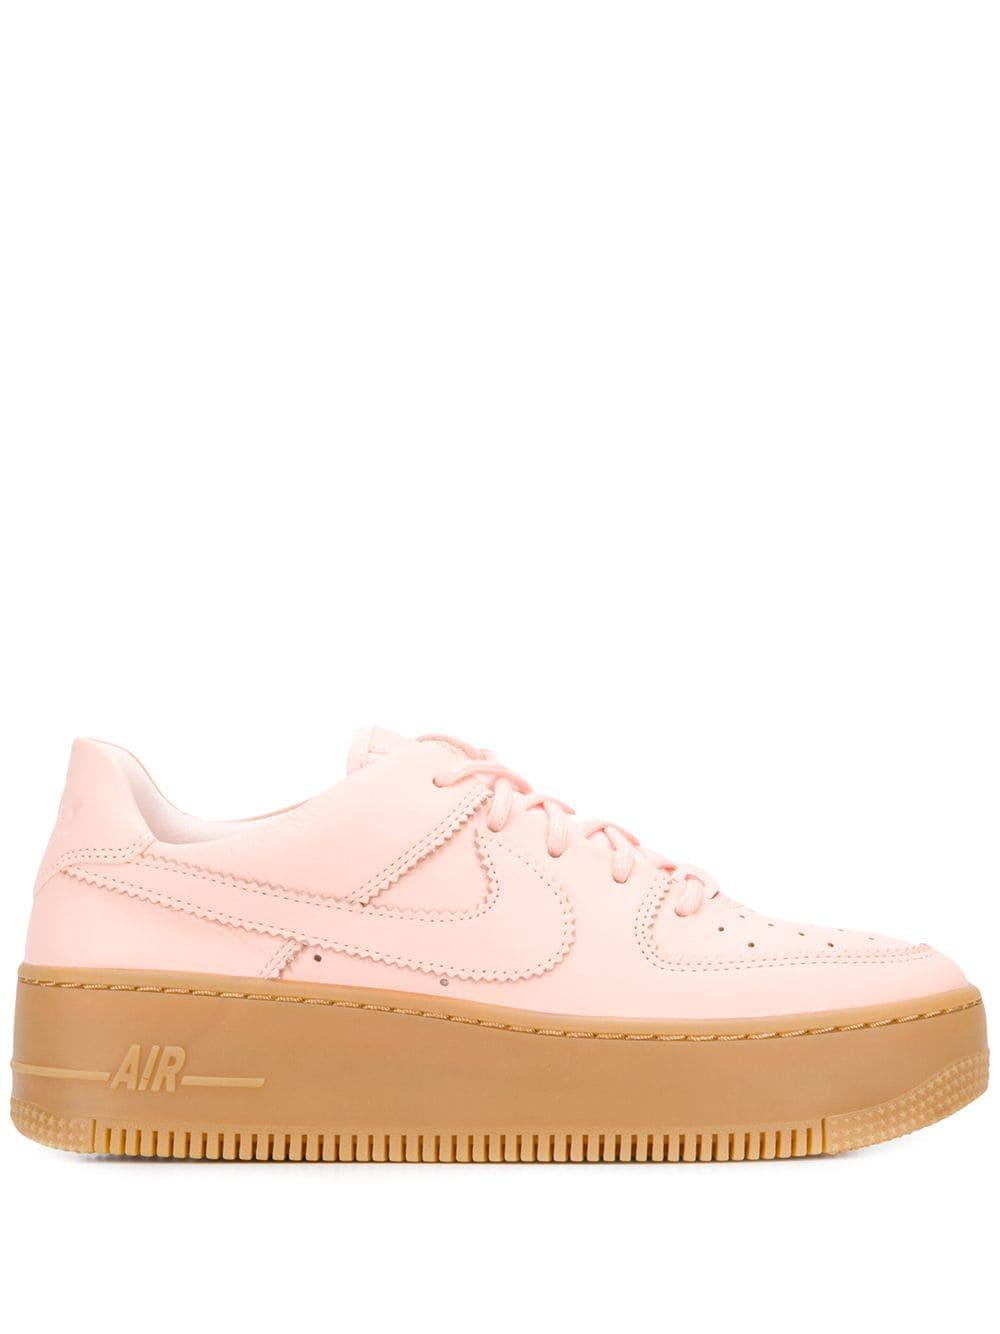 Nike Air Force 1 Low Lx Sneakers in Pink |